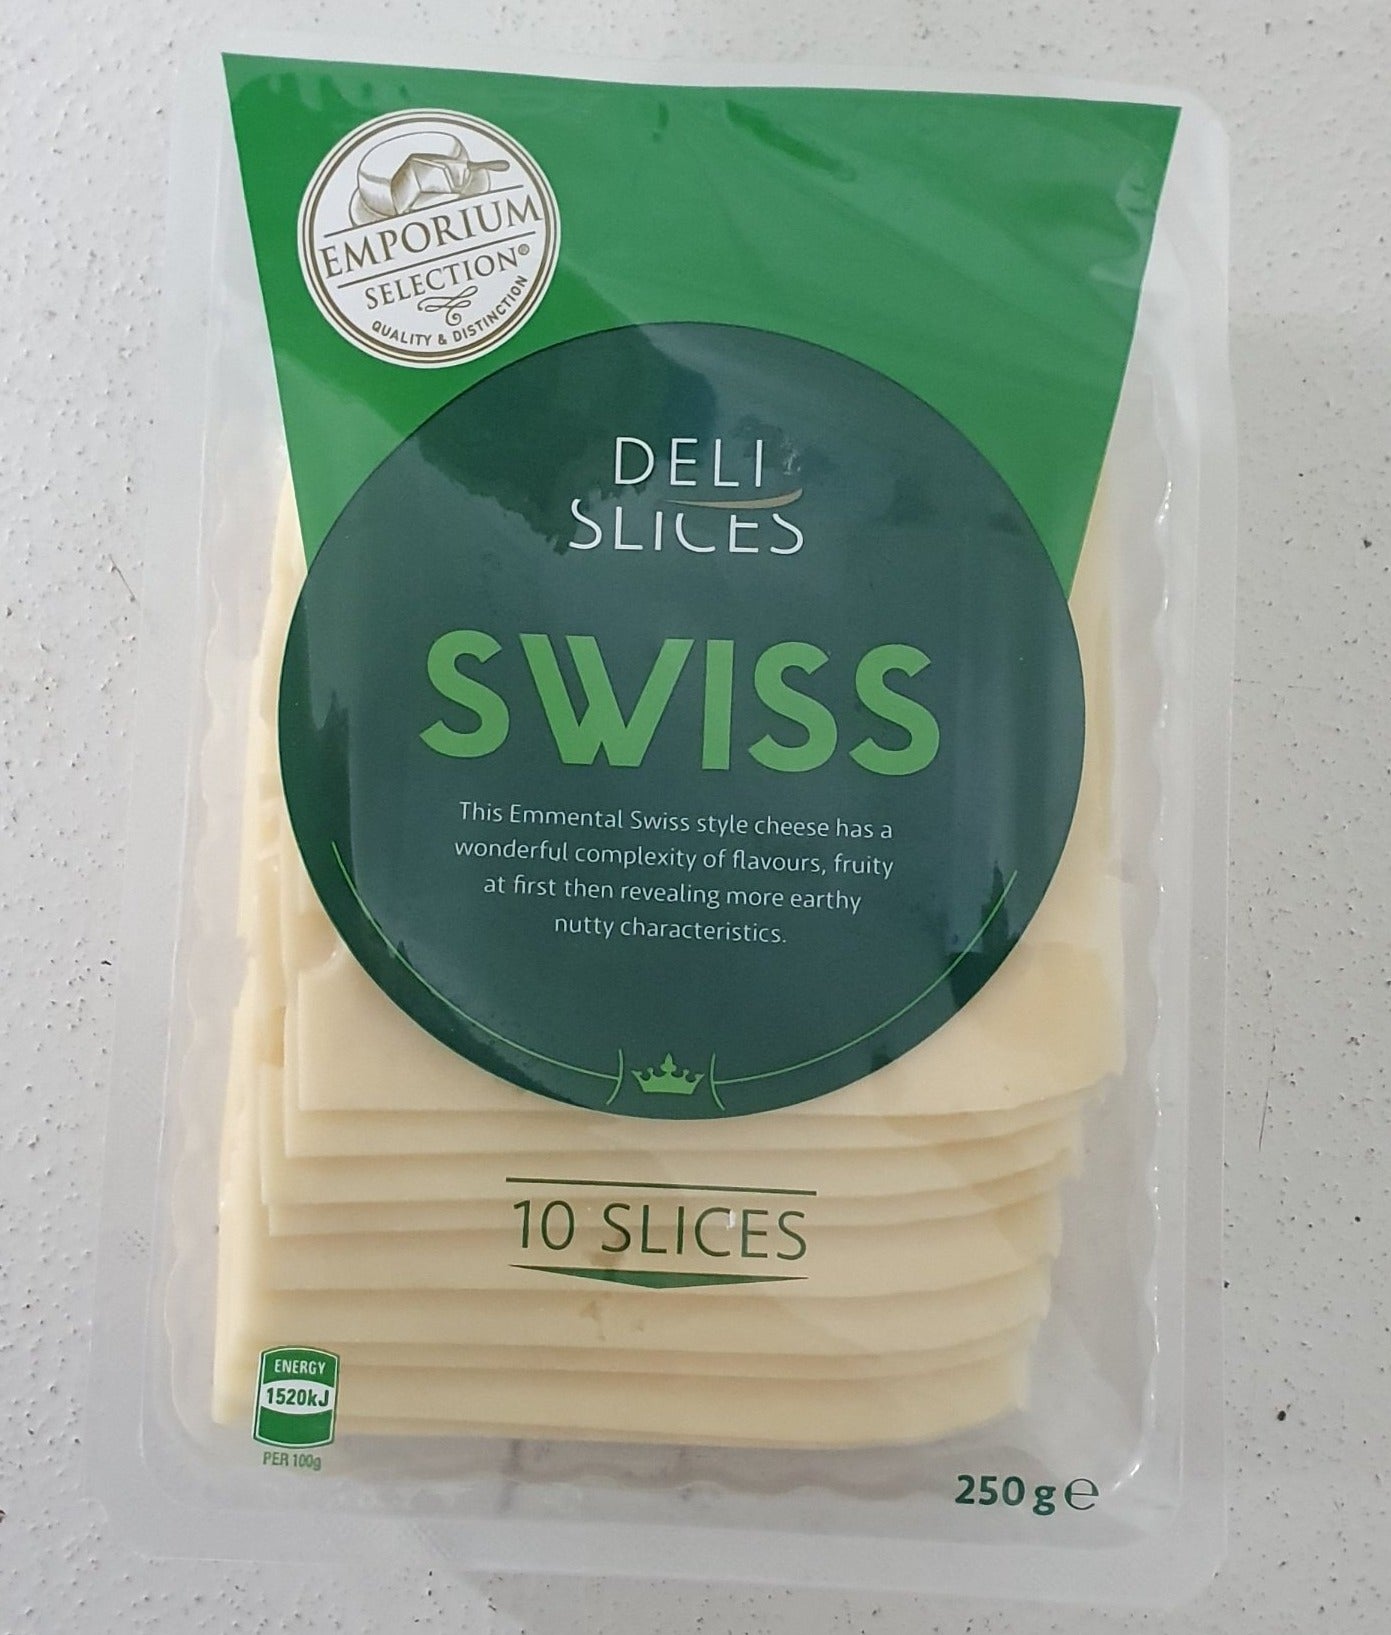 Emporium Deli Slices Swiss Cheese 10 Slices